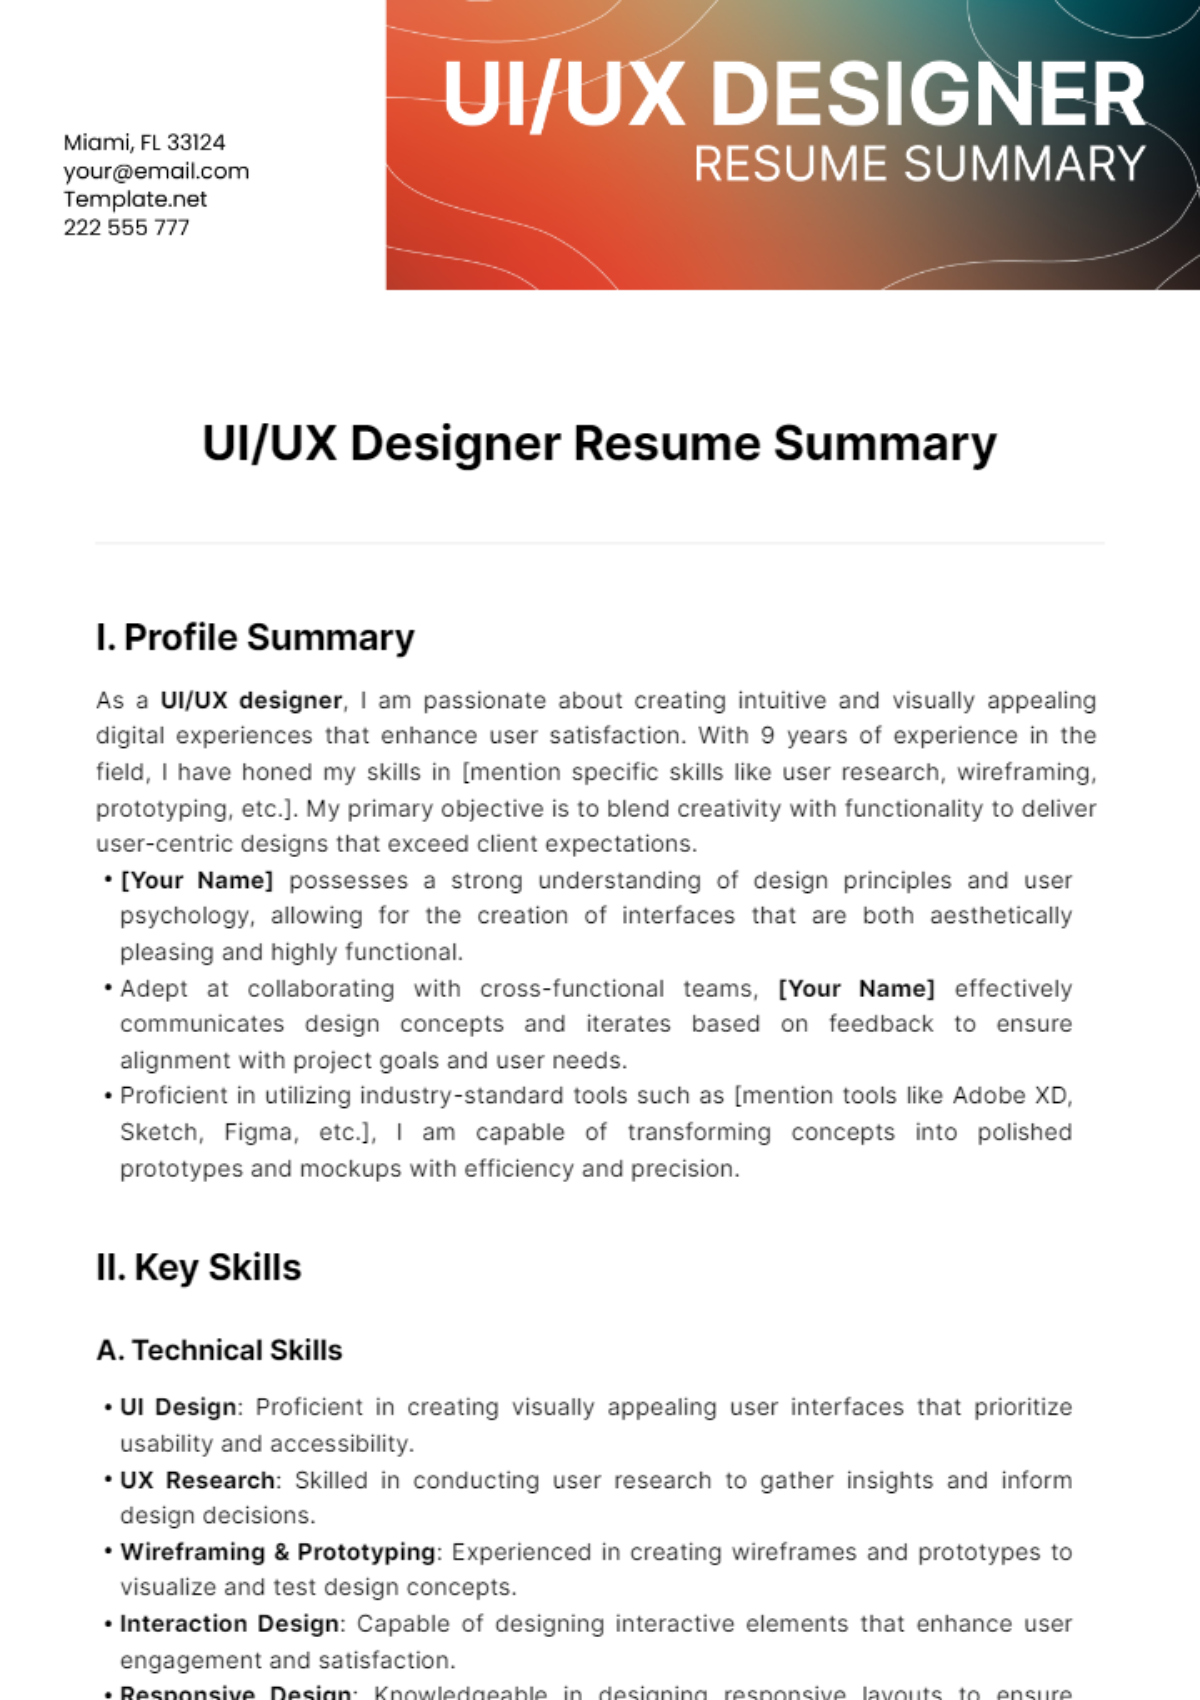 Free UI/UX Designer Resume Summary Template